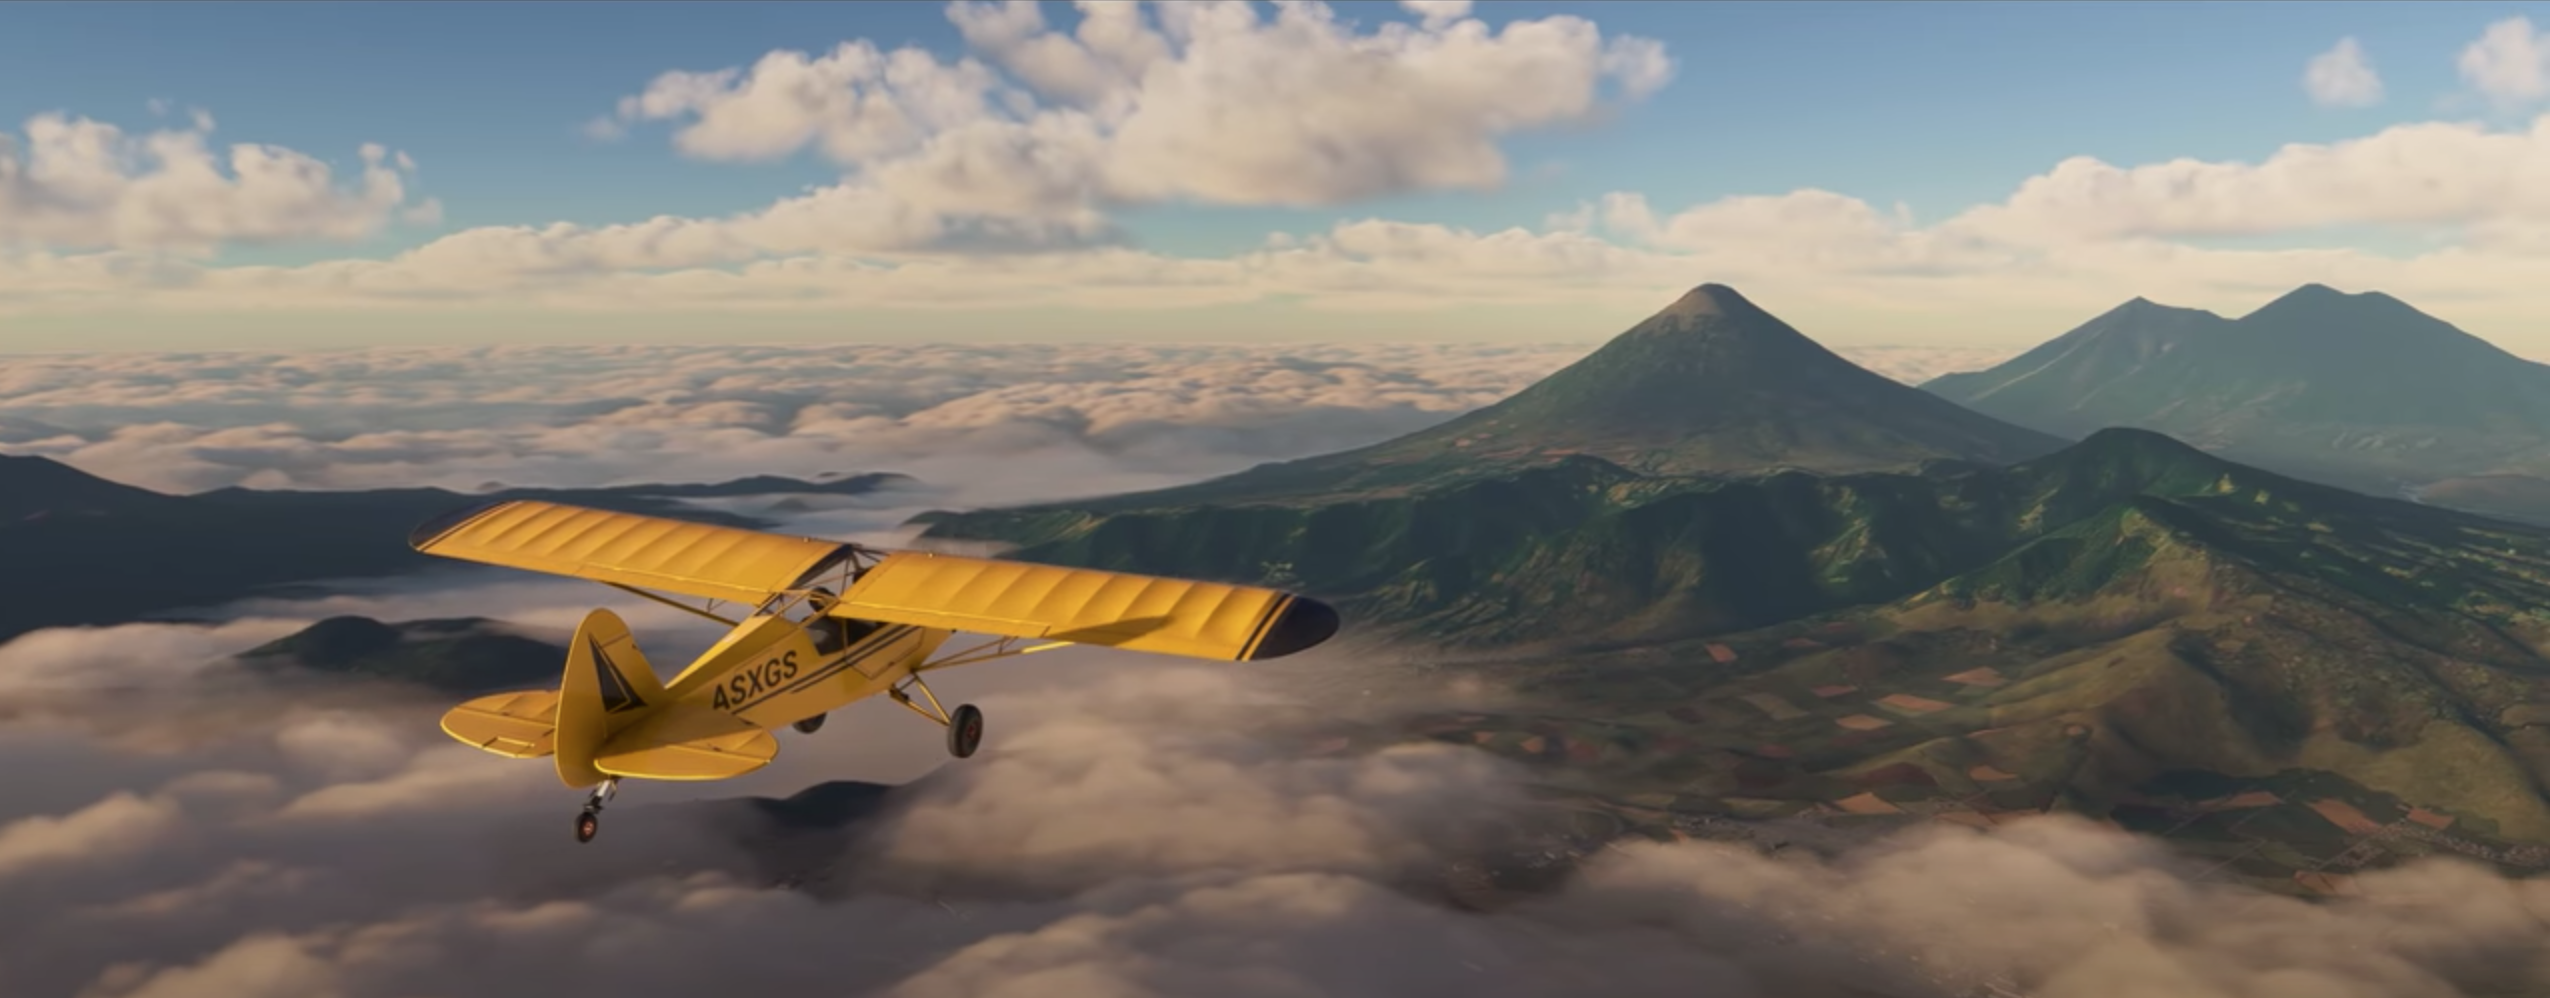 Microsoft ประกาศ Flight Simulator 2020 สำหรับคอนโซล Next-Gen พร้อมตัวอย่างใหม่